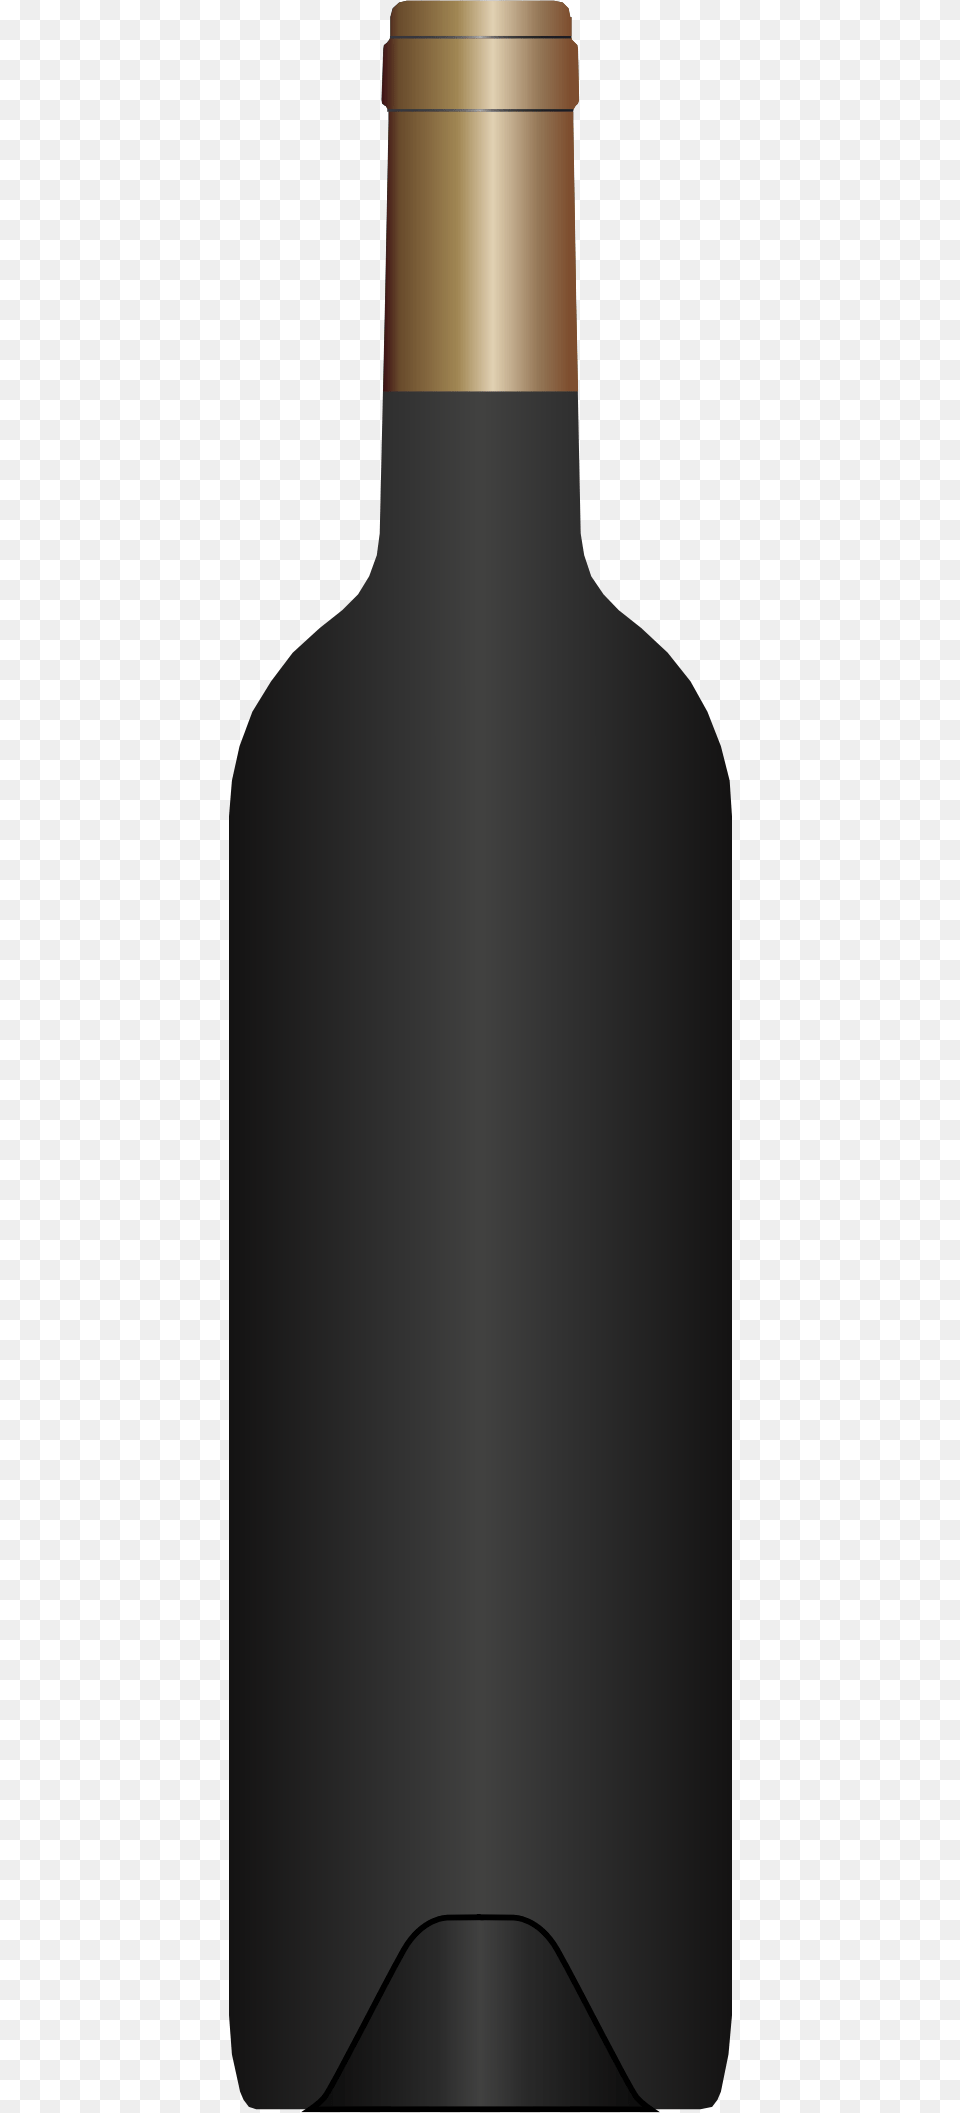 This Icons Design Of Bordelesa Negra Cpsula, Alcohol, Beverage, Bottle, Liquor Png Image